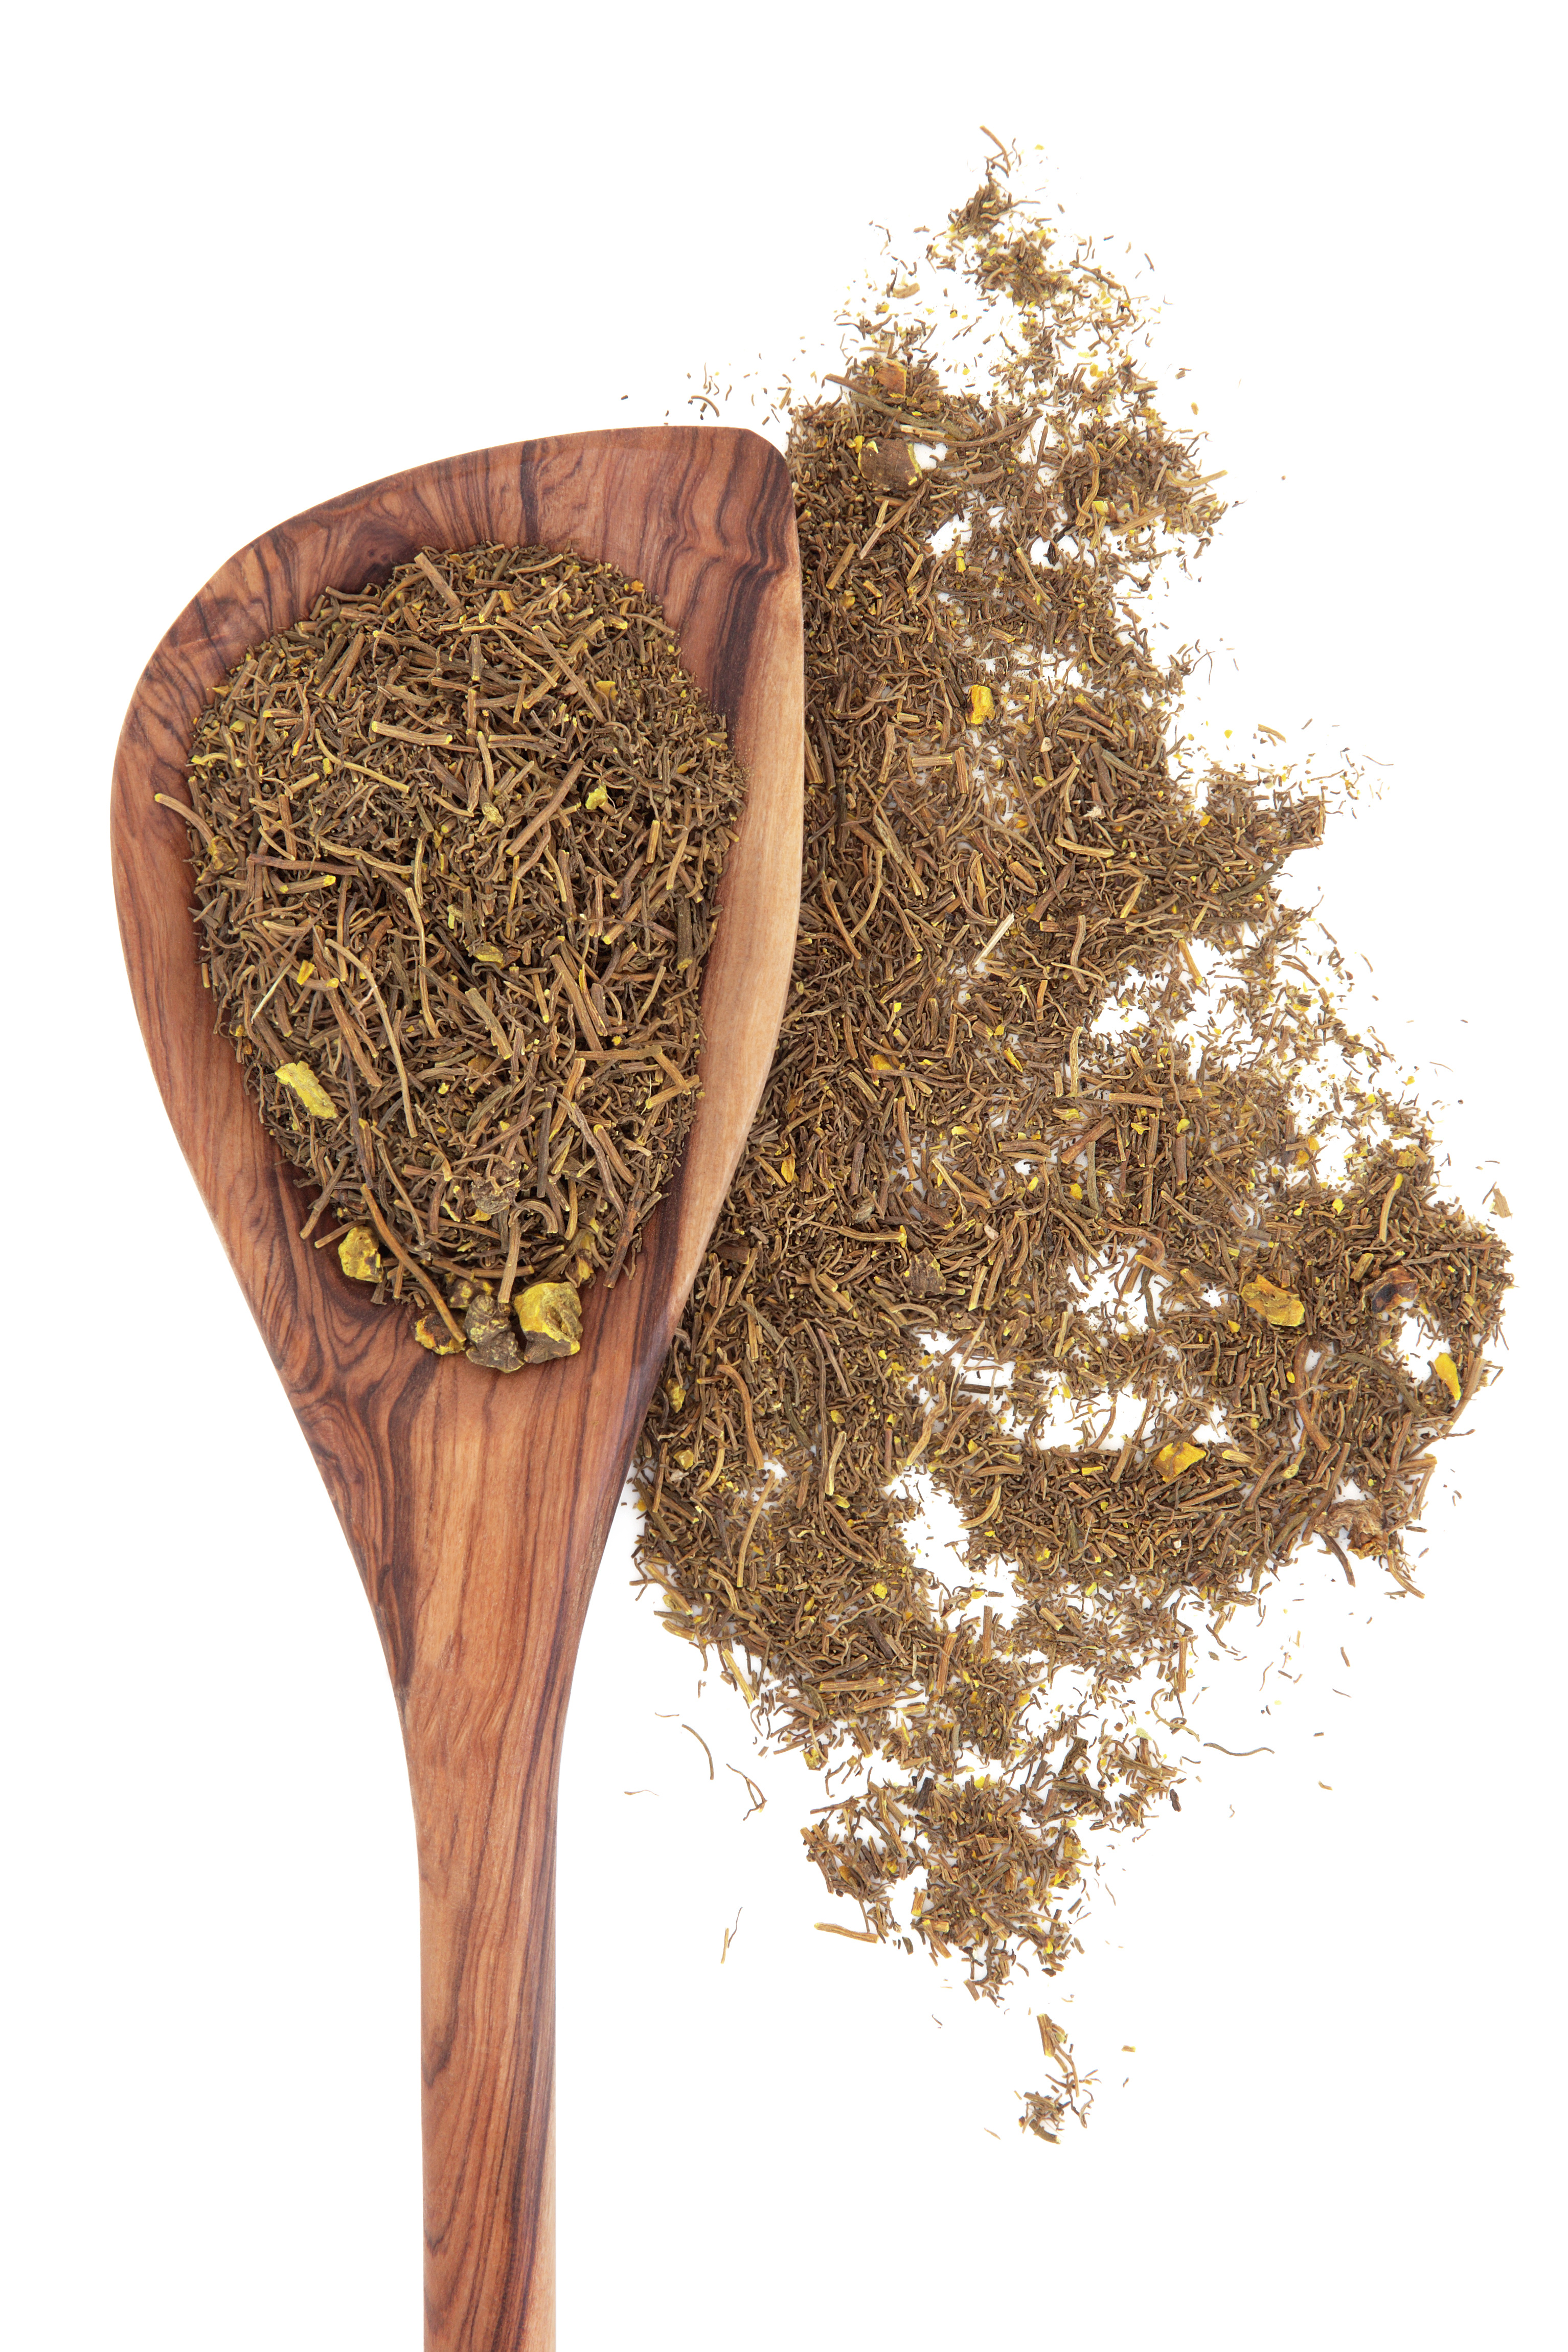 Goldenseal herbs